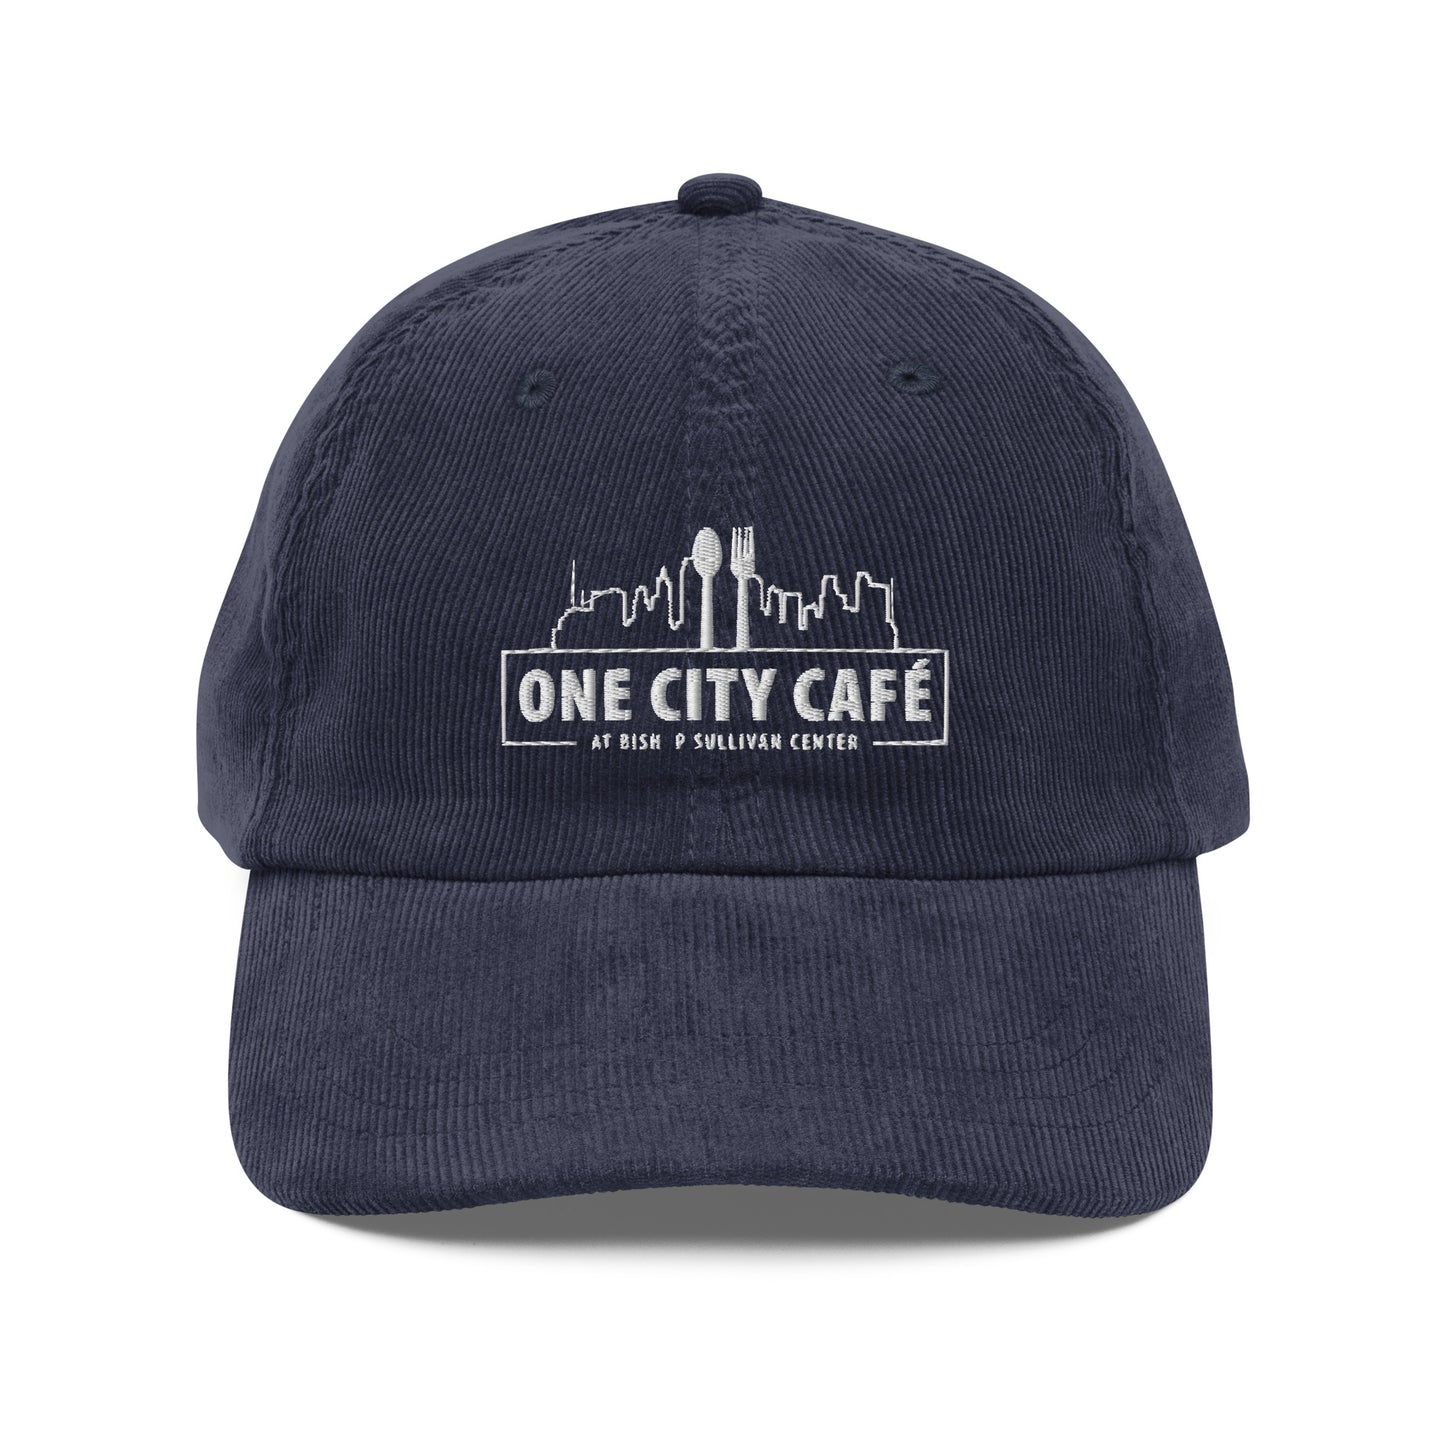 Bishop Sullivan Cafe corduroy cap